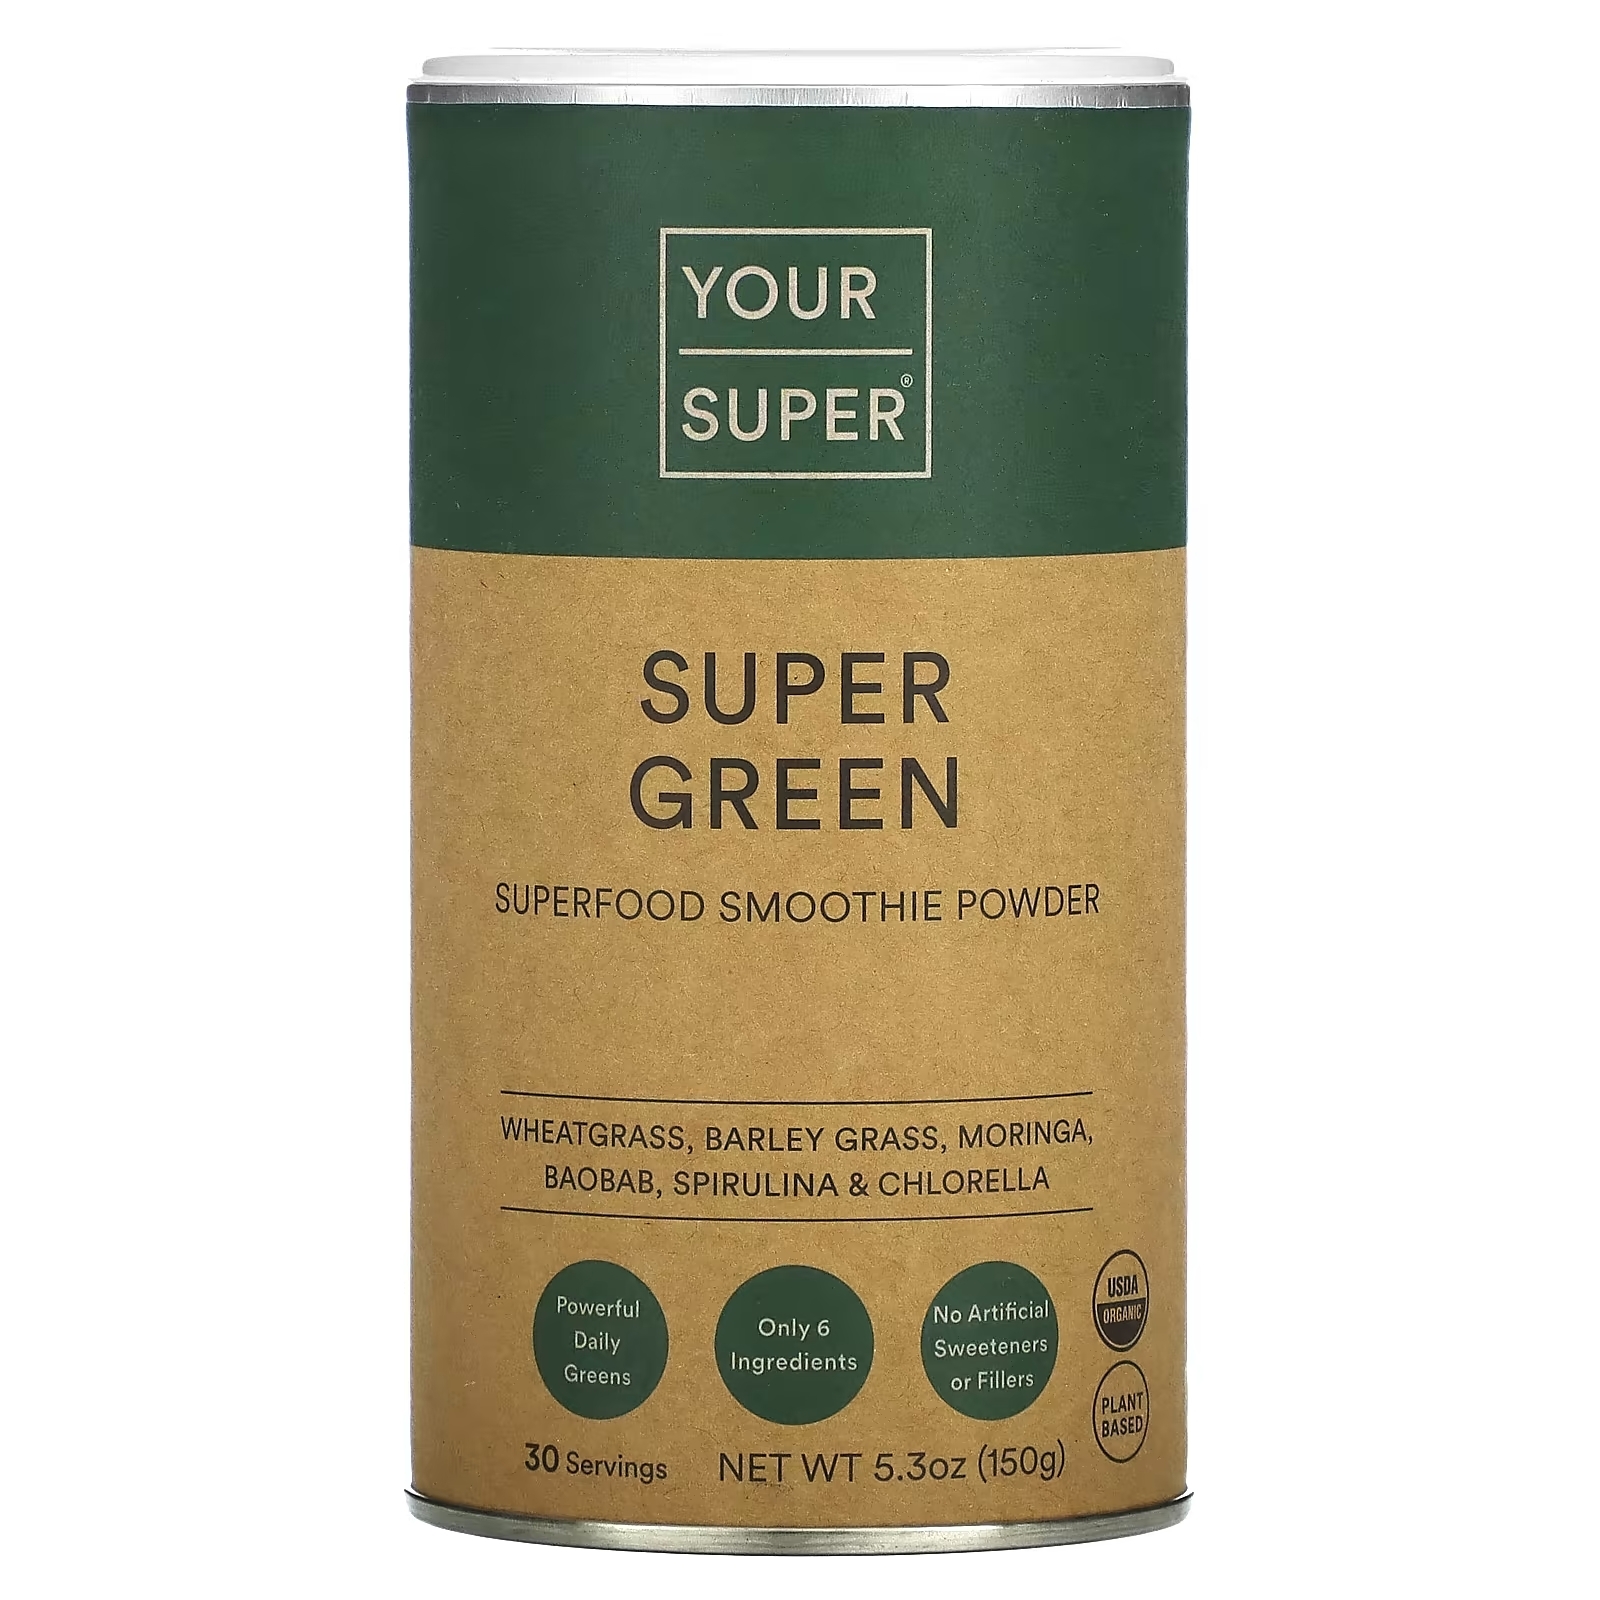 Your Super Super Green Superfood Smoothie Powder, 150 g